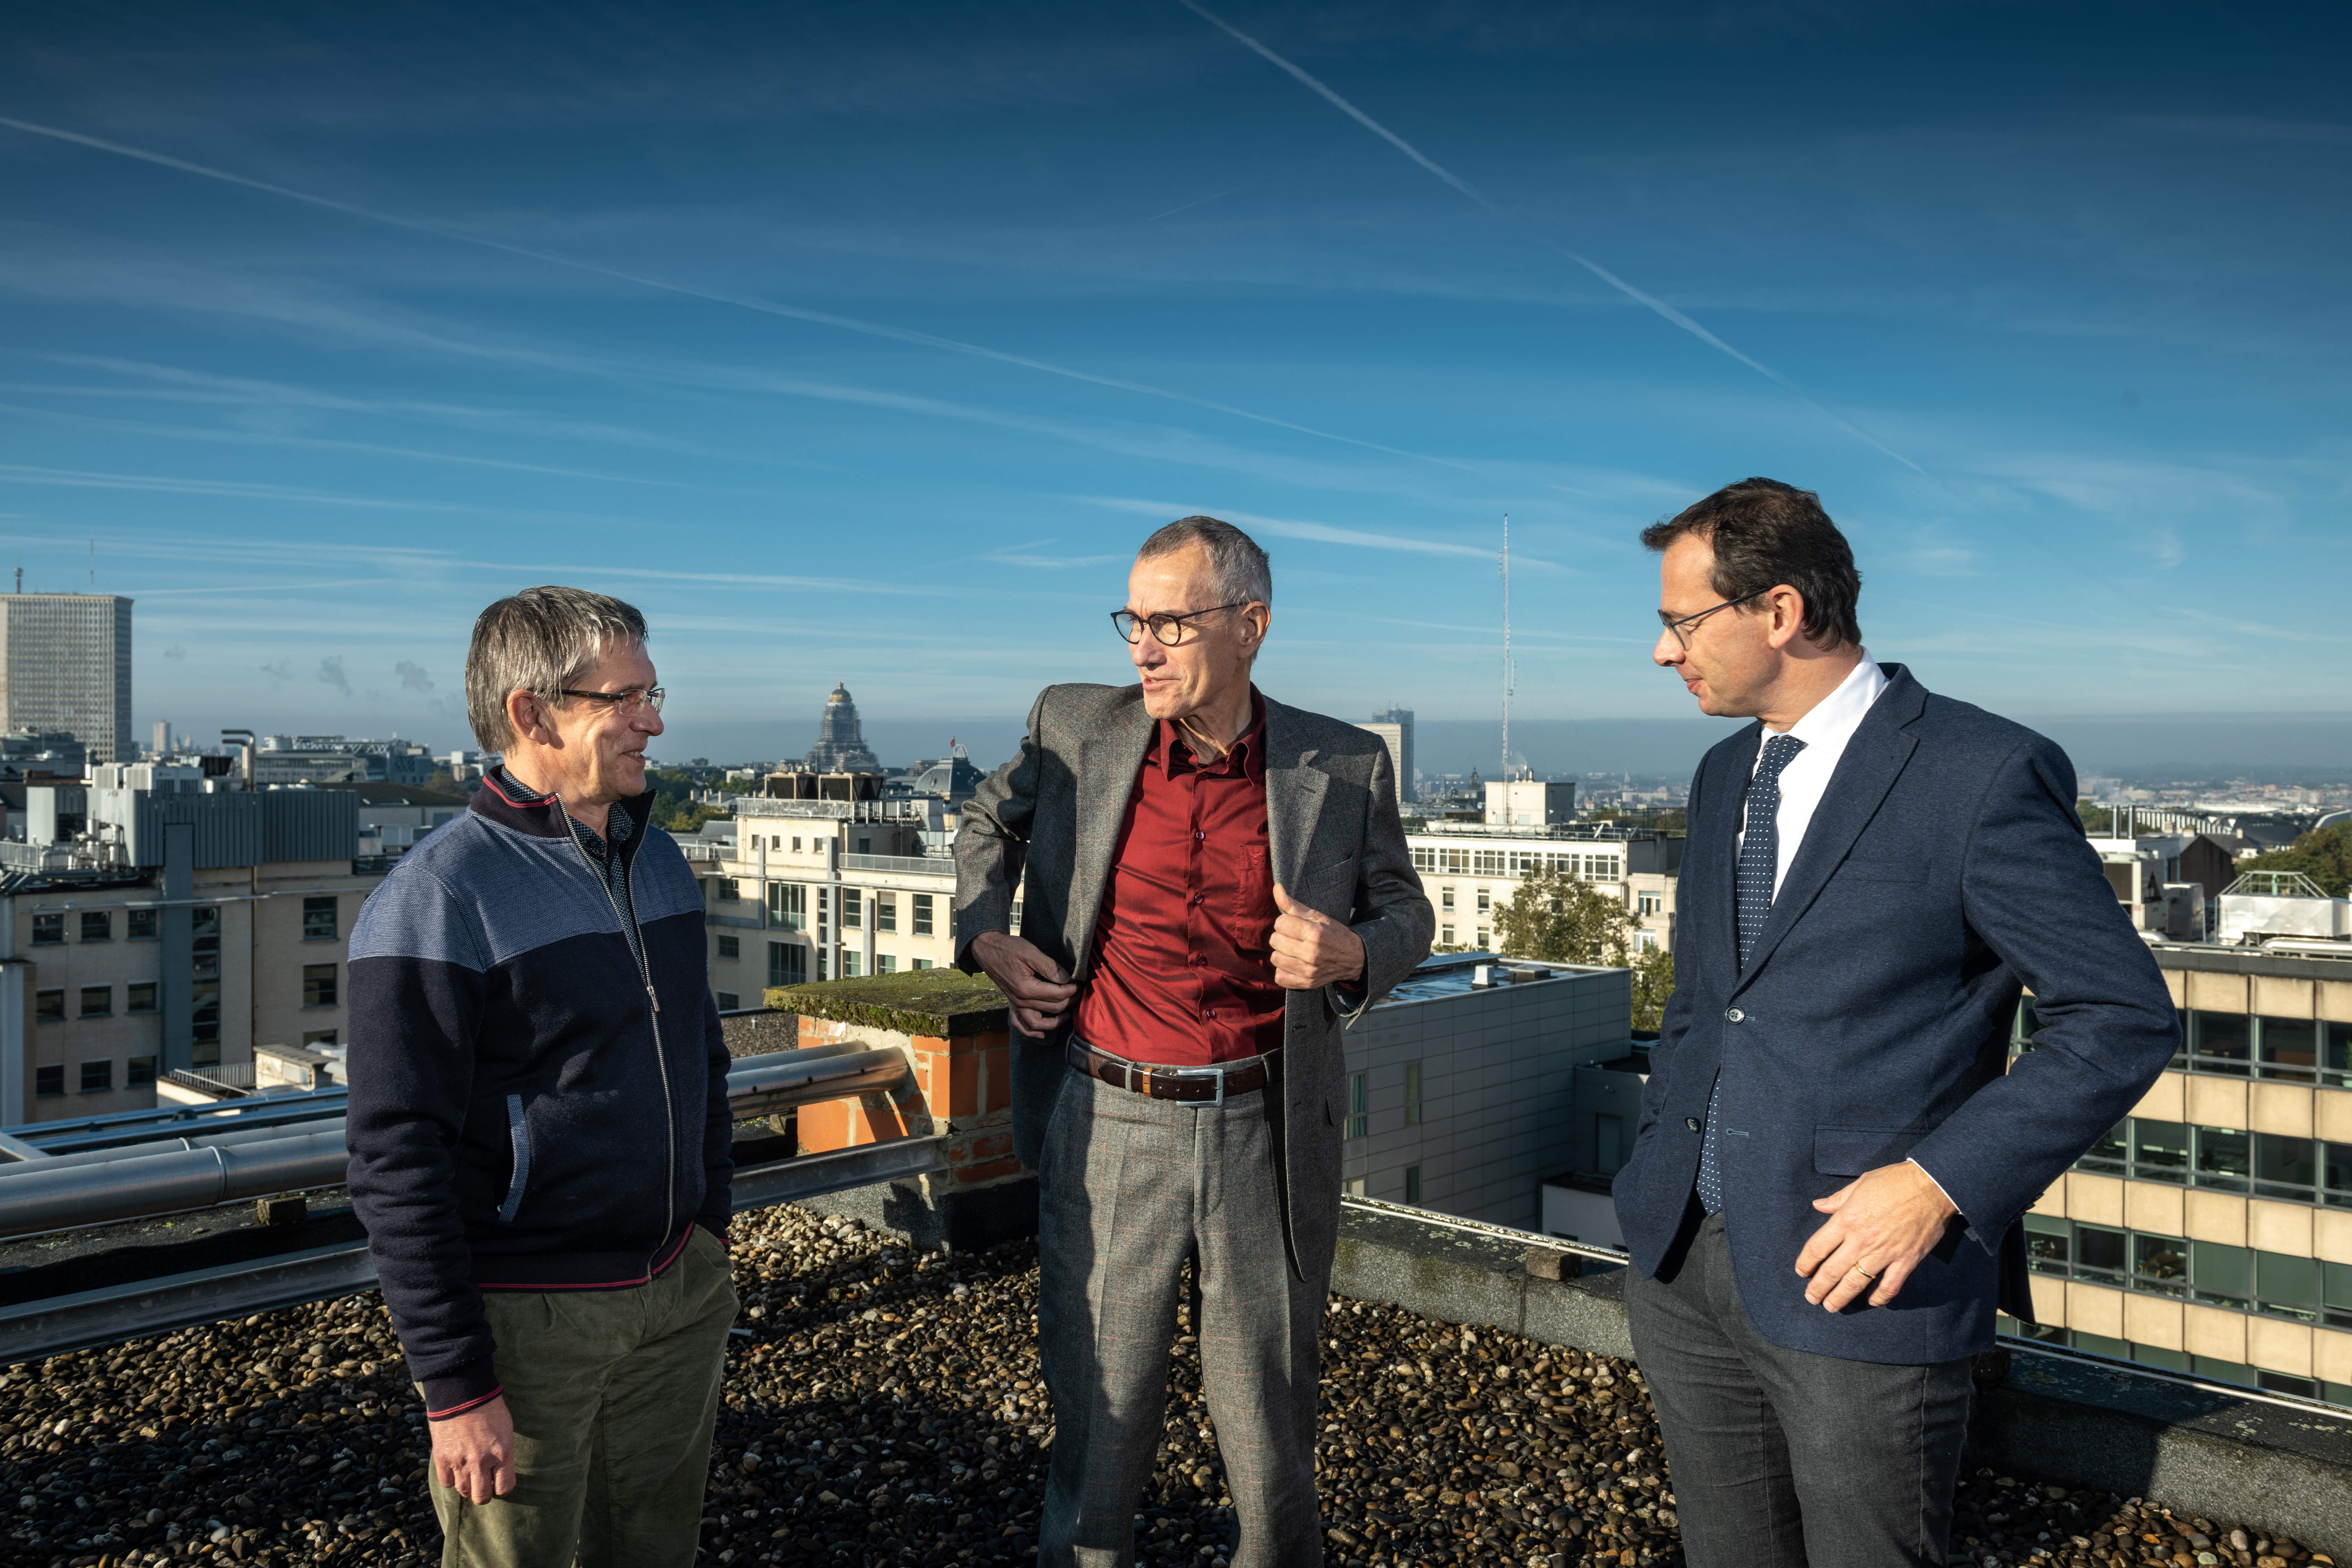 20211007 Brussel Belgie: Interview over zorg met ministers Wouter Beke en Frank Vandenbroucke en Mark Selleslach van ACV. Copyright Bart Dewaele